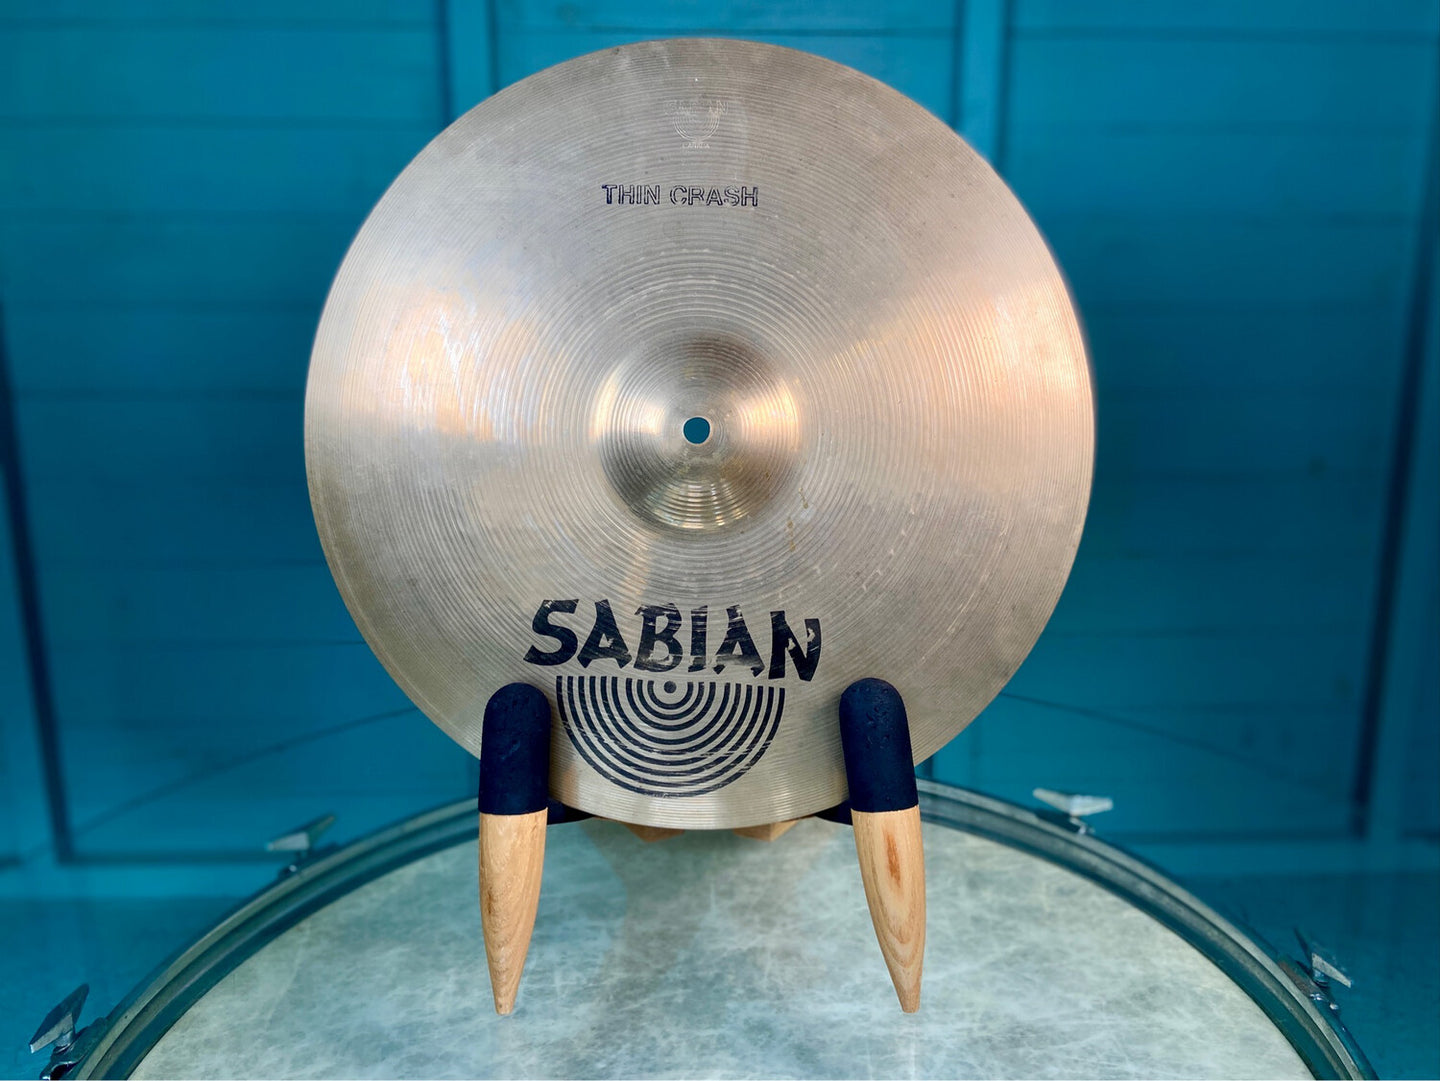 Sabian Pre-AA Series 16” Thin Crash Cymbal 995g - 1980’s